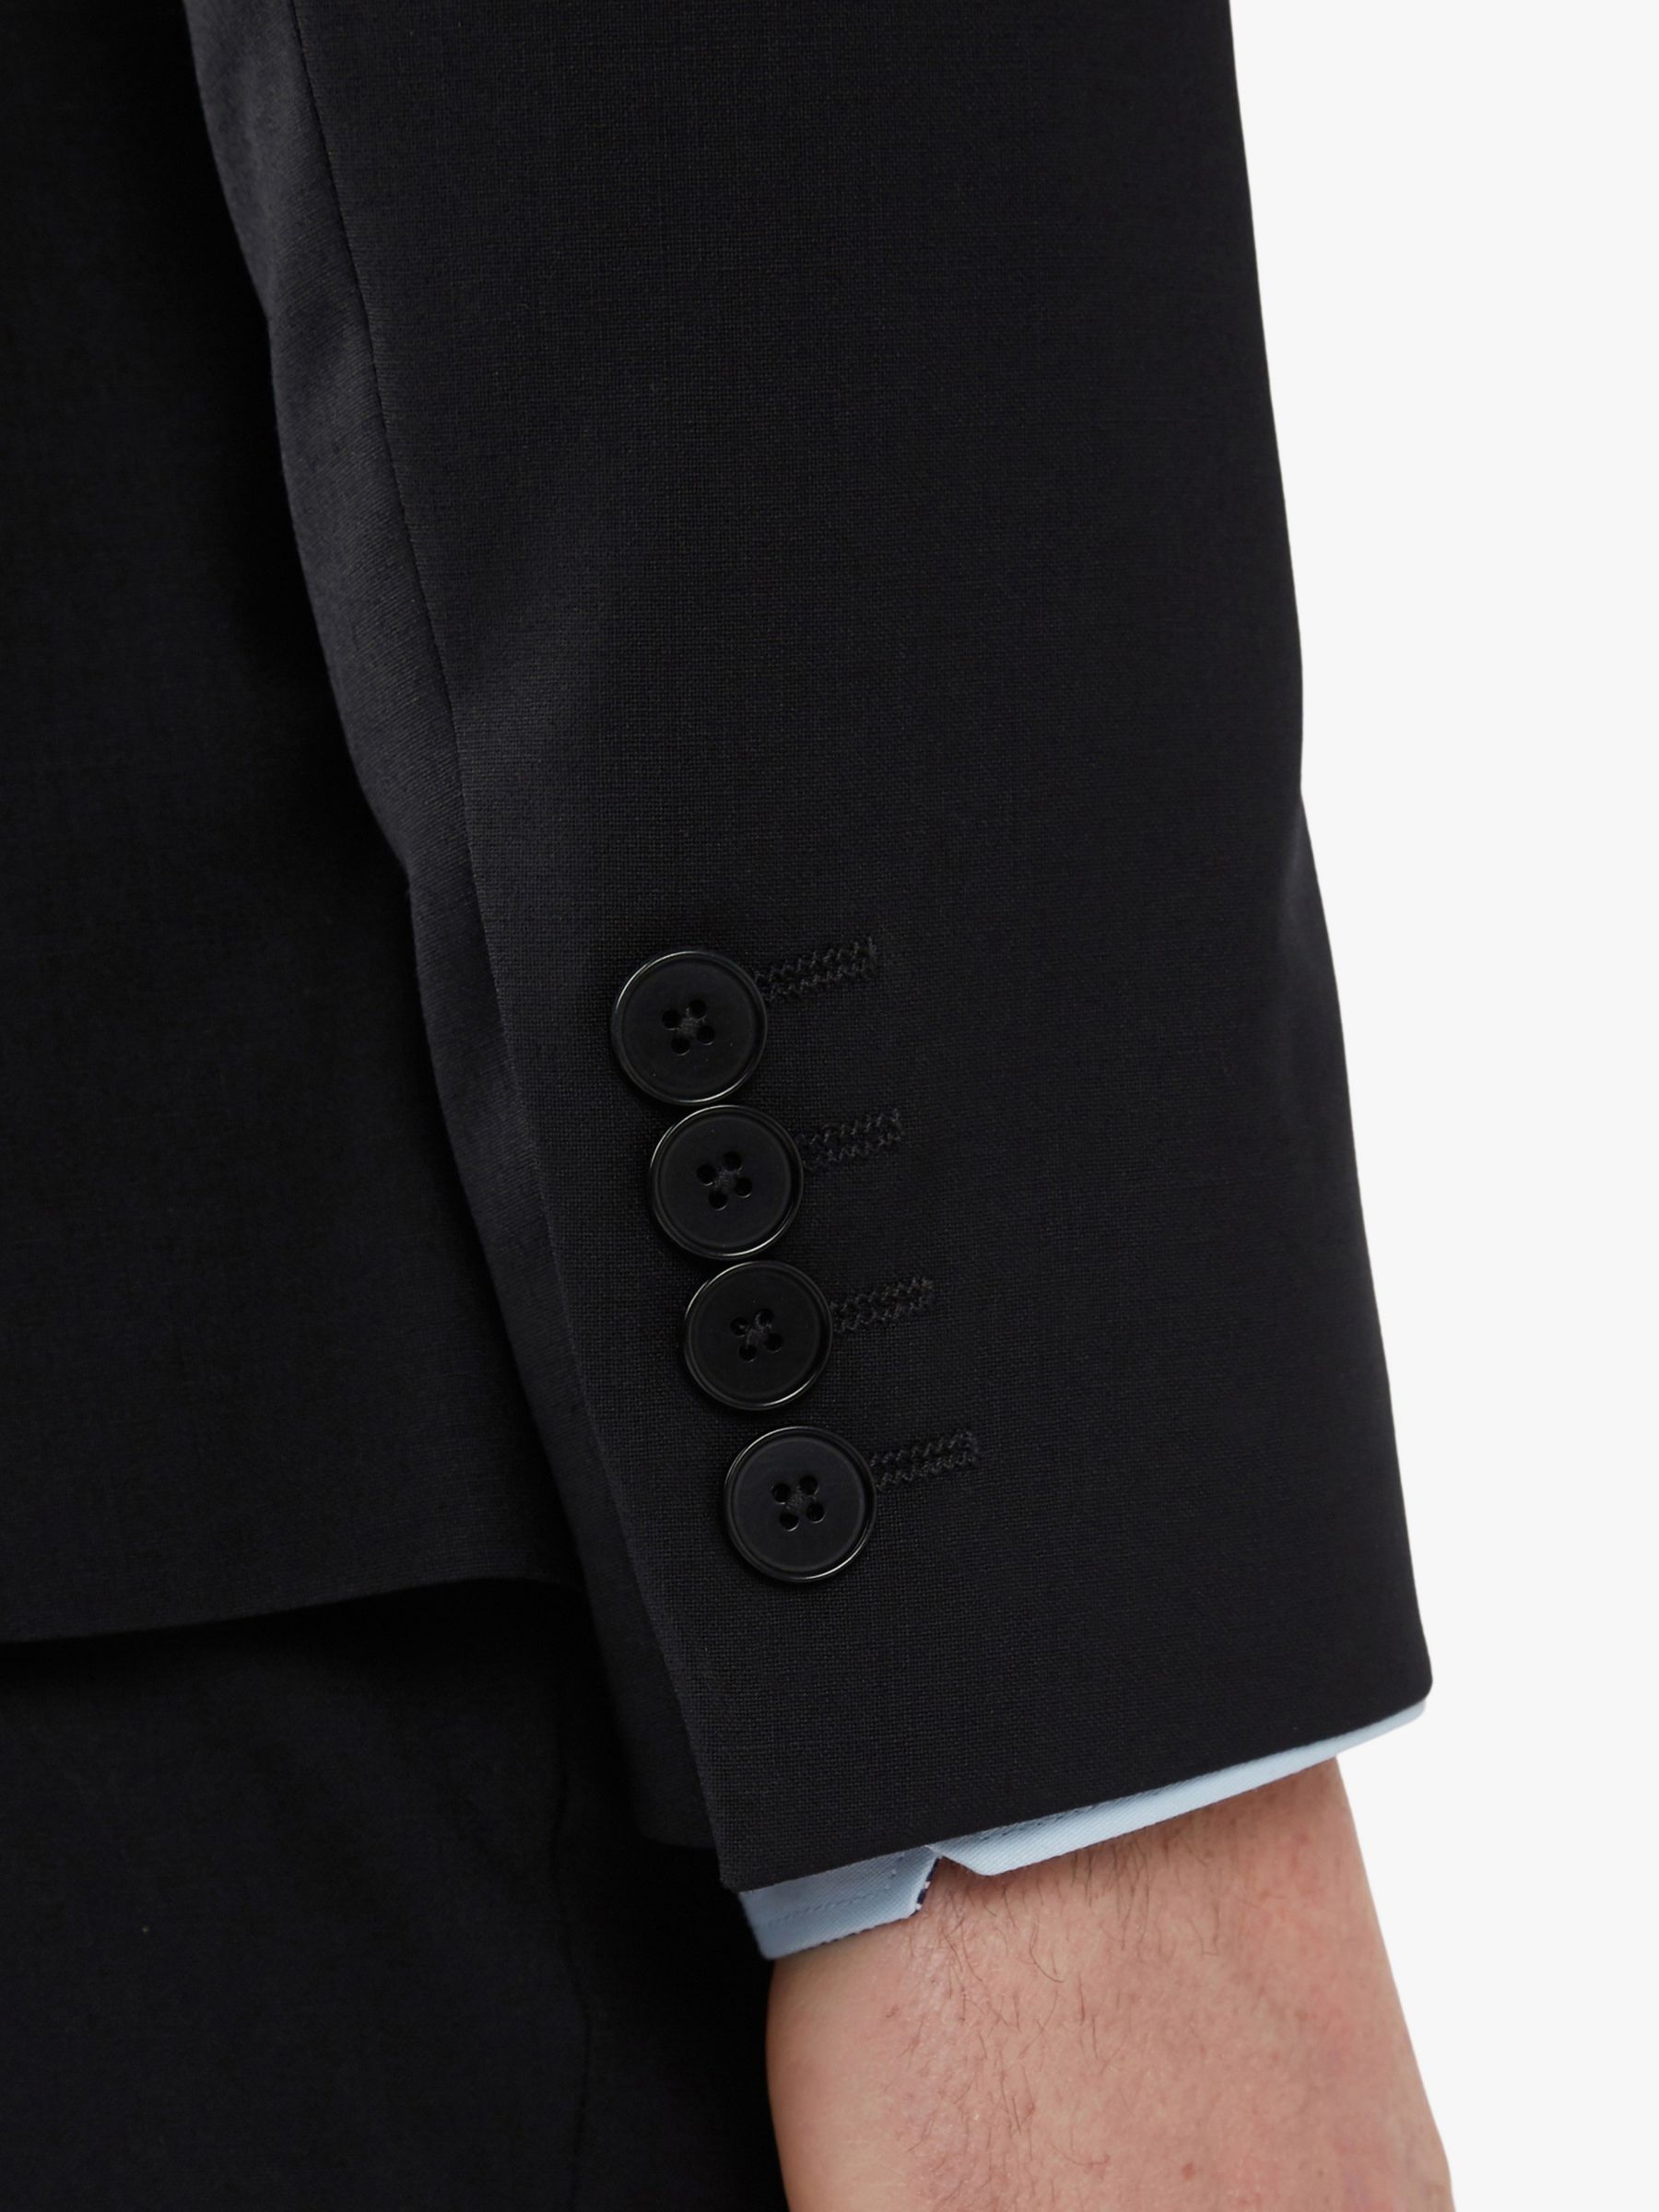 Ted Baker Panama Wool Blend Suit Jacket, Black, 38S